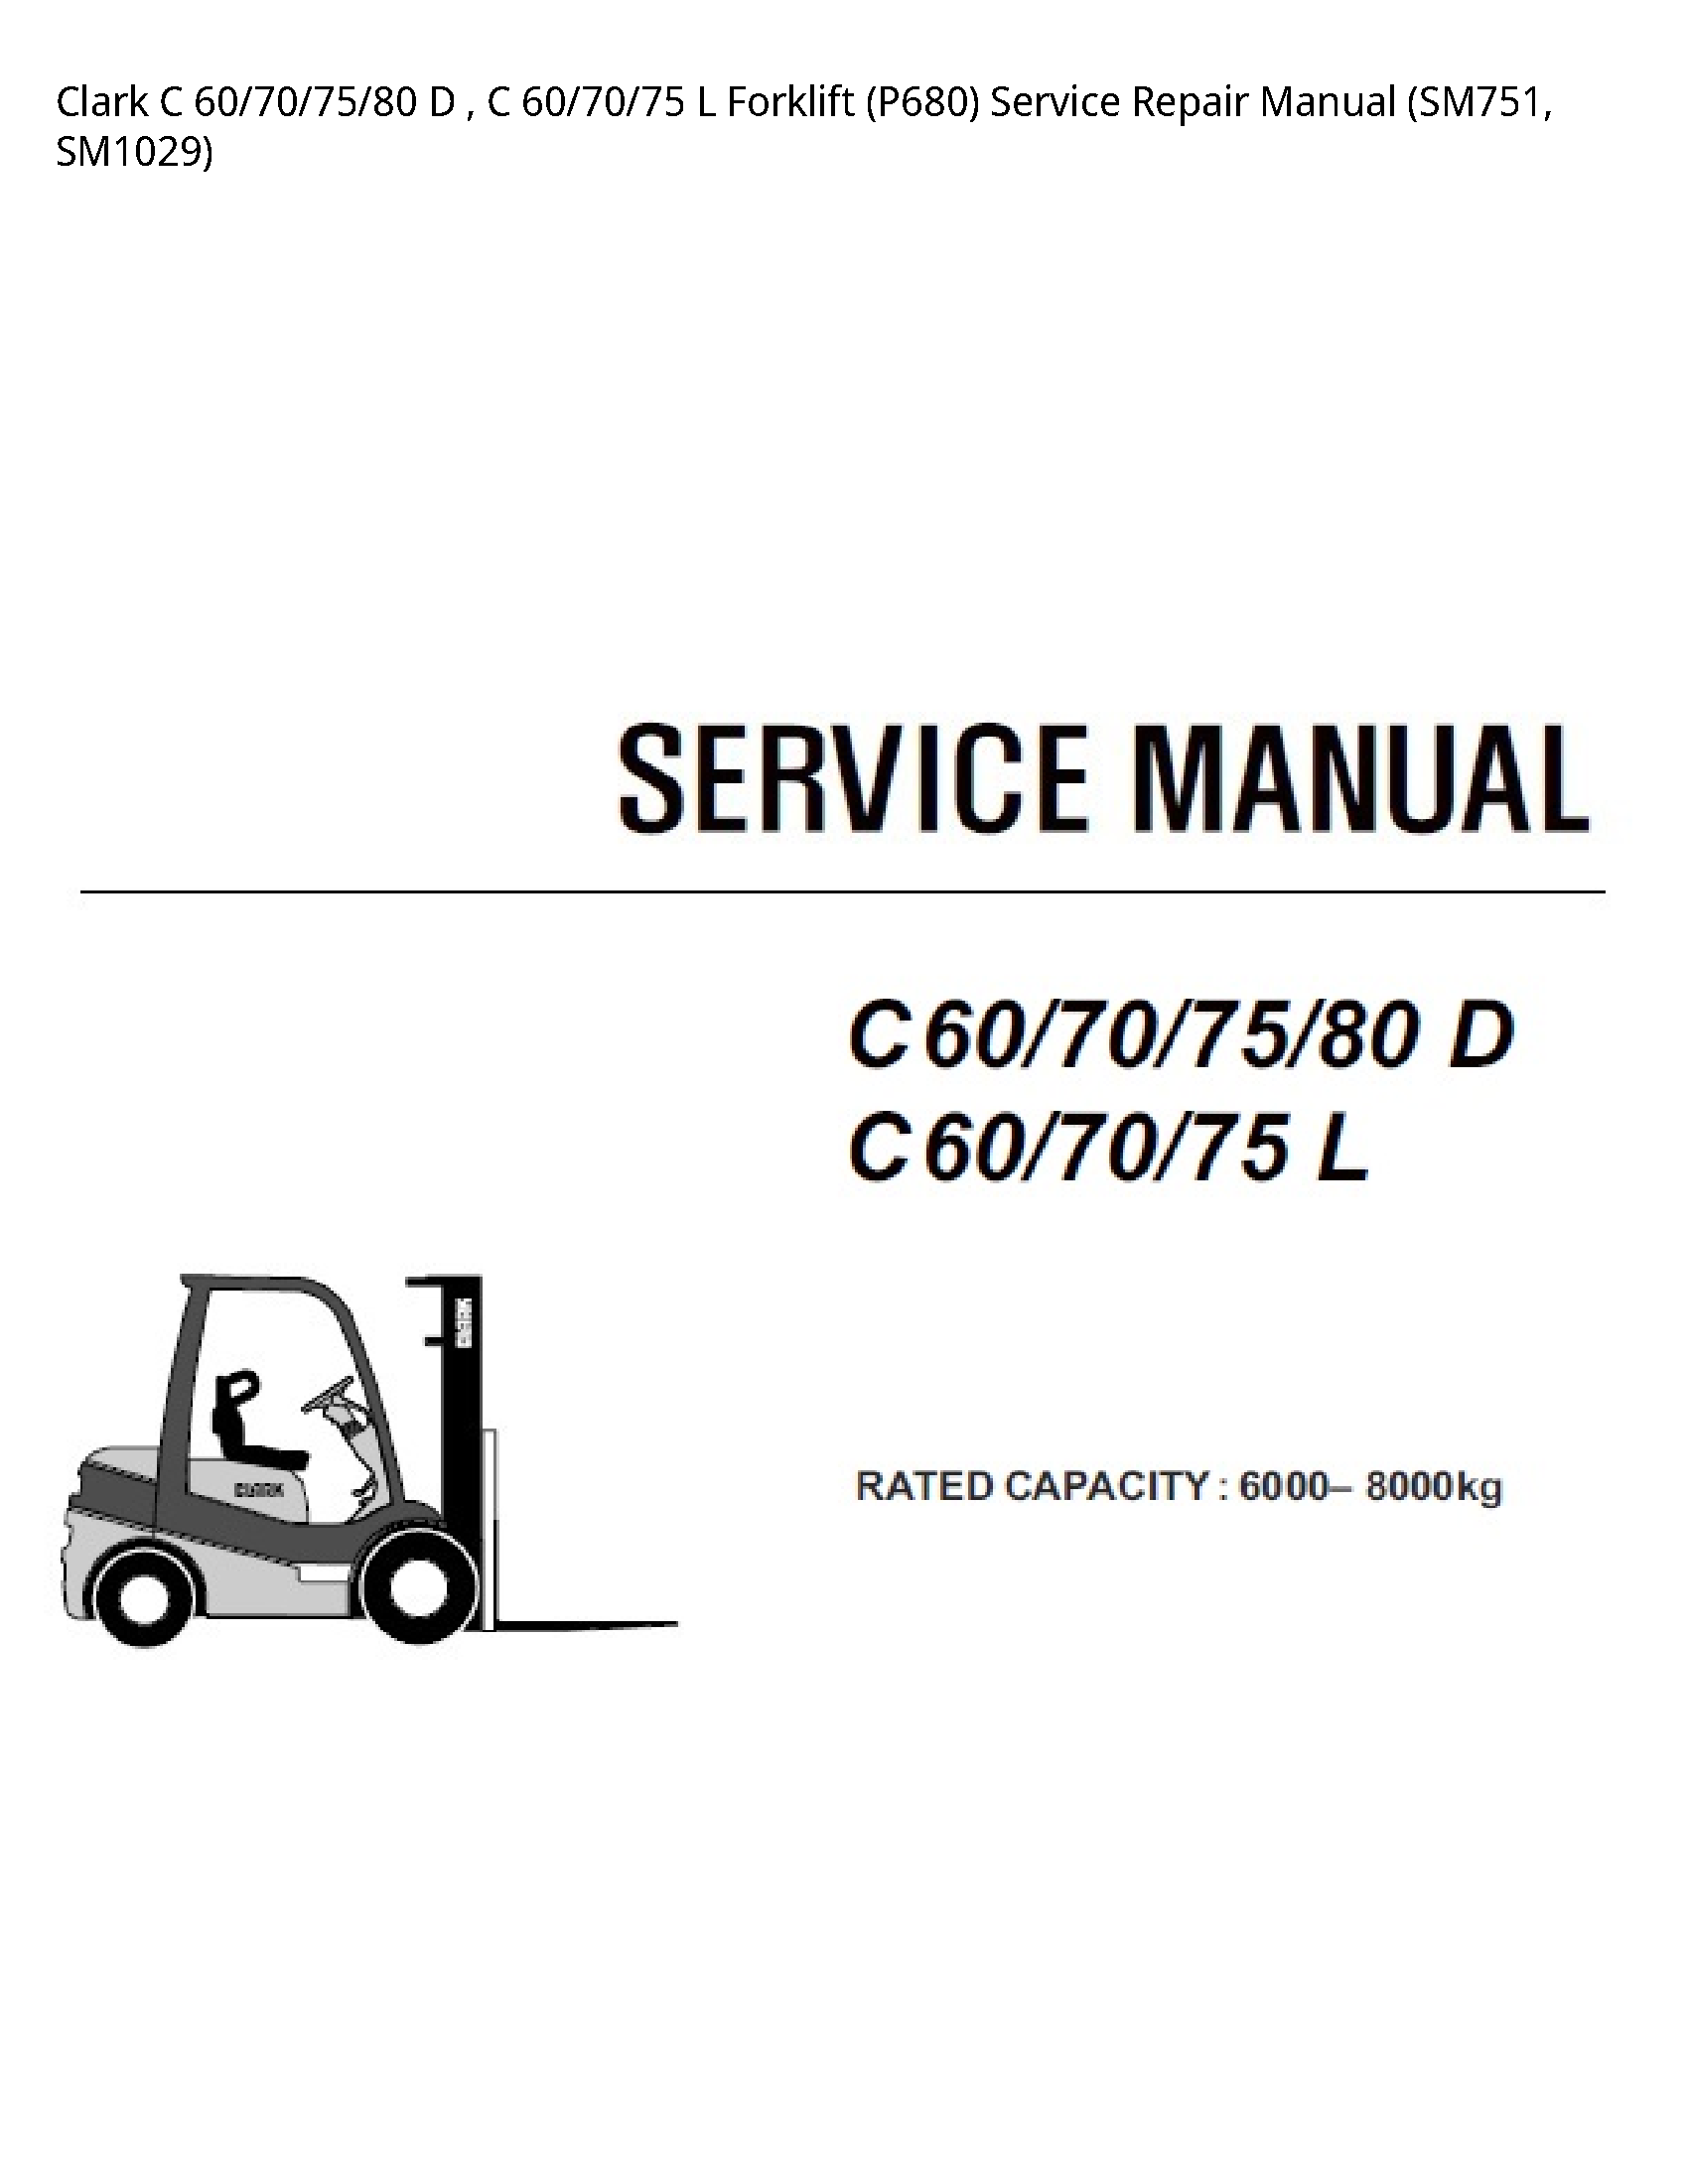 Clark 60 Forklift manual